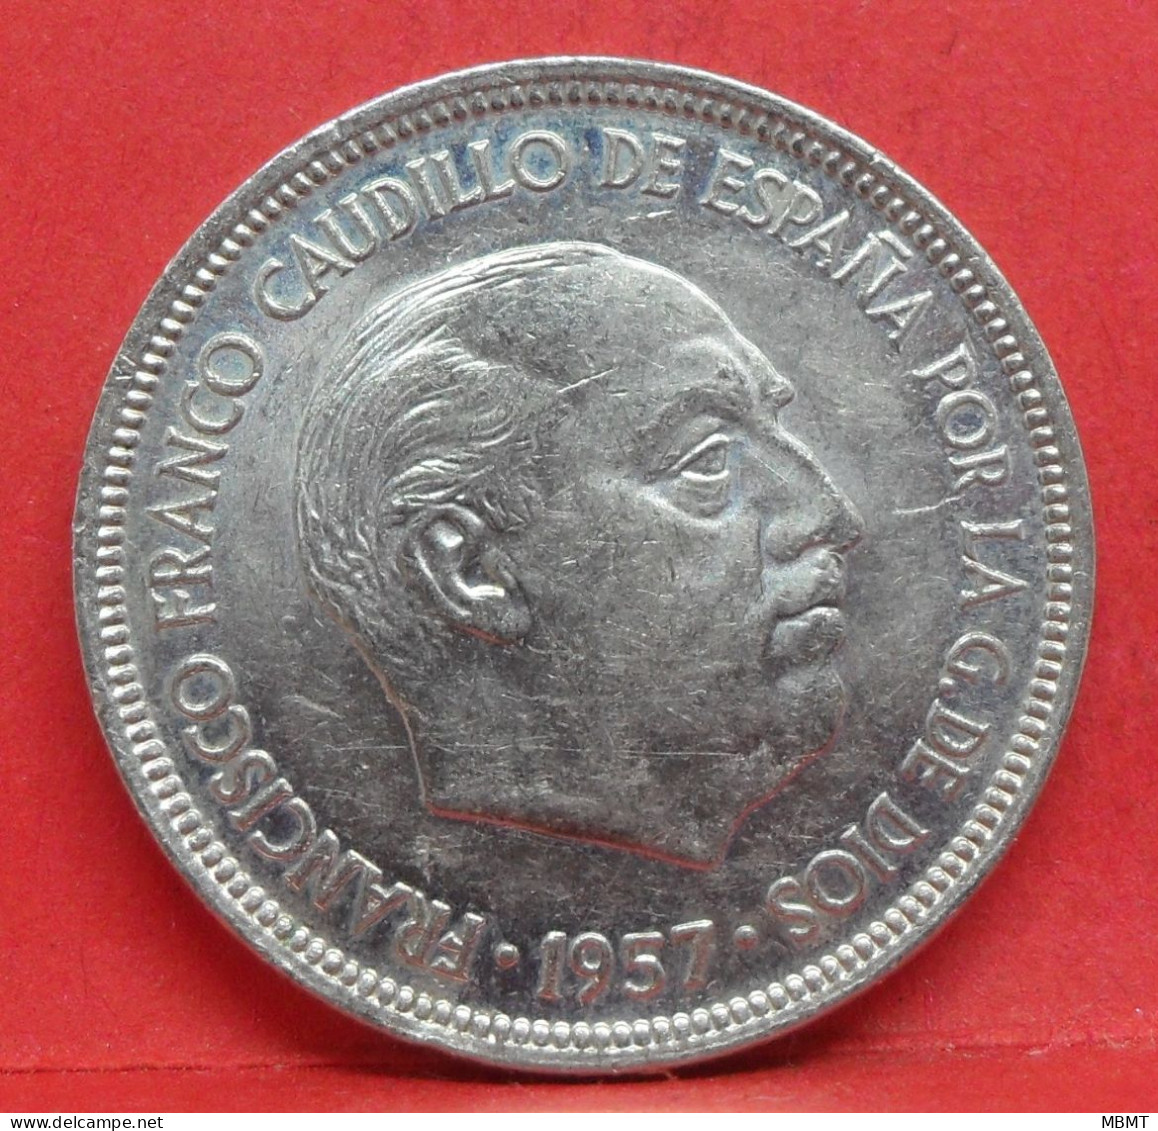 5 Pesetas 1957 étoile 73 - SPL - Pièce Monnaie Espagne - Article N°2360 - 5 Pesetas